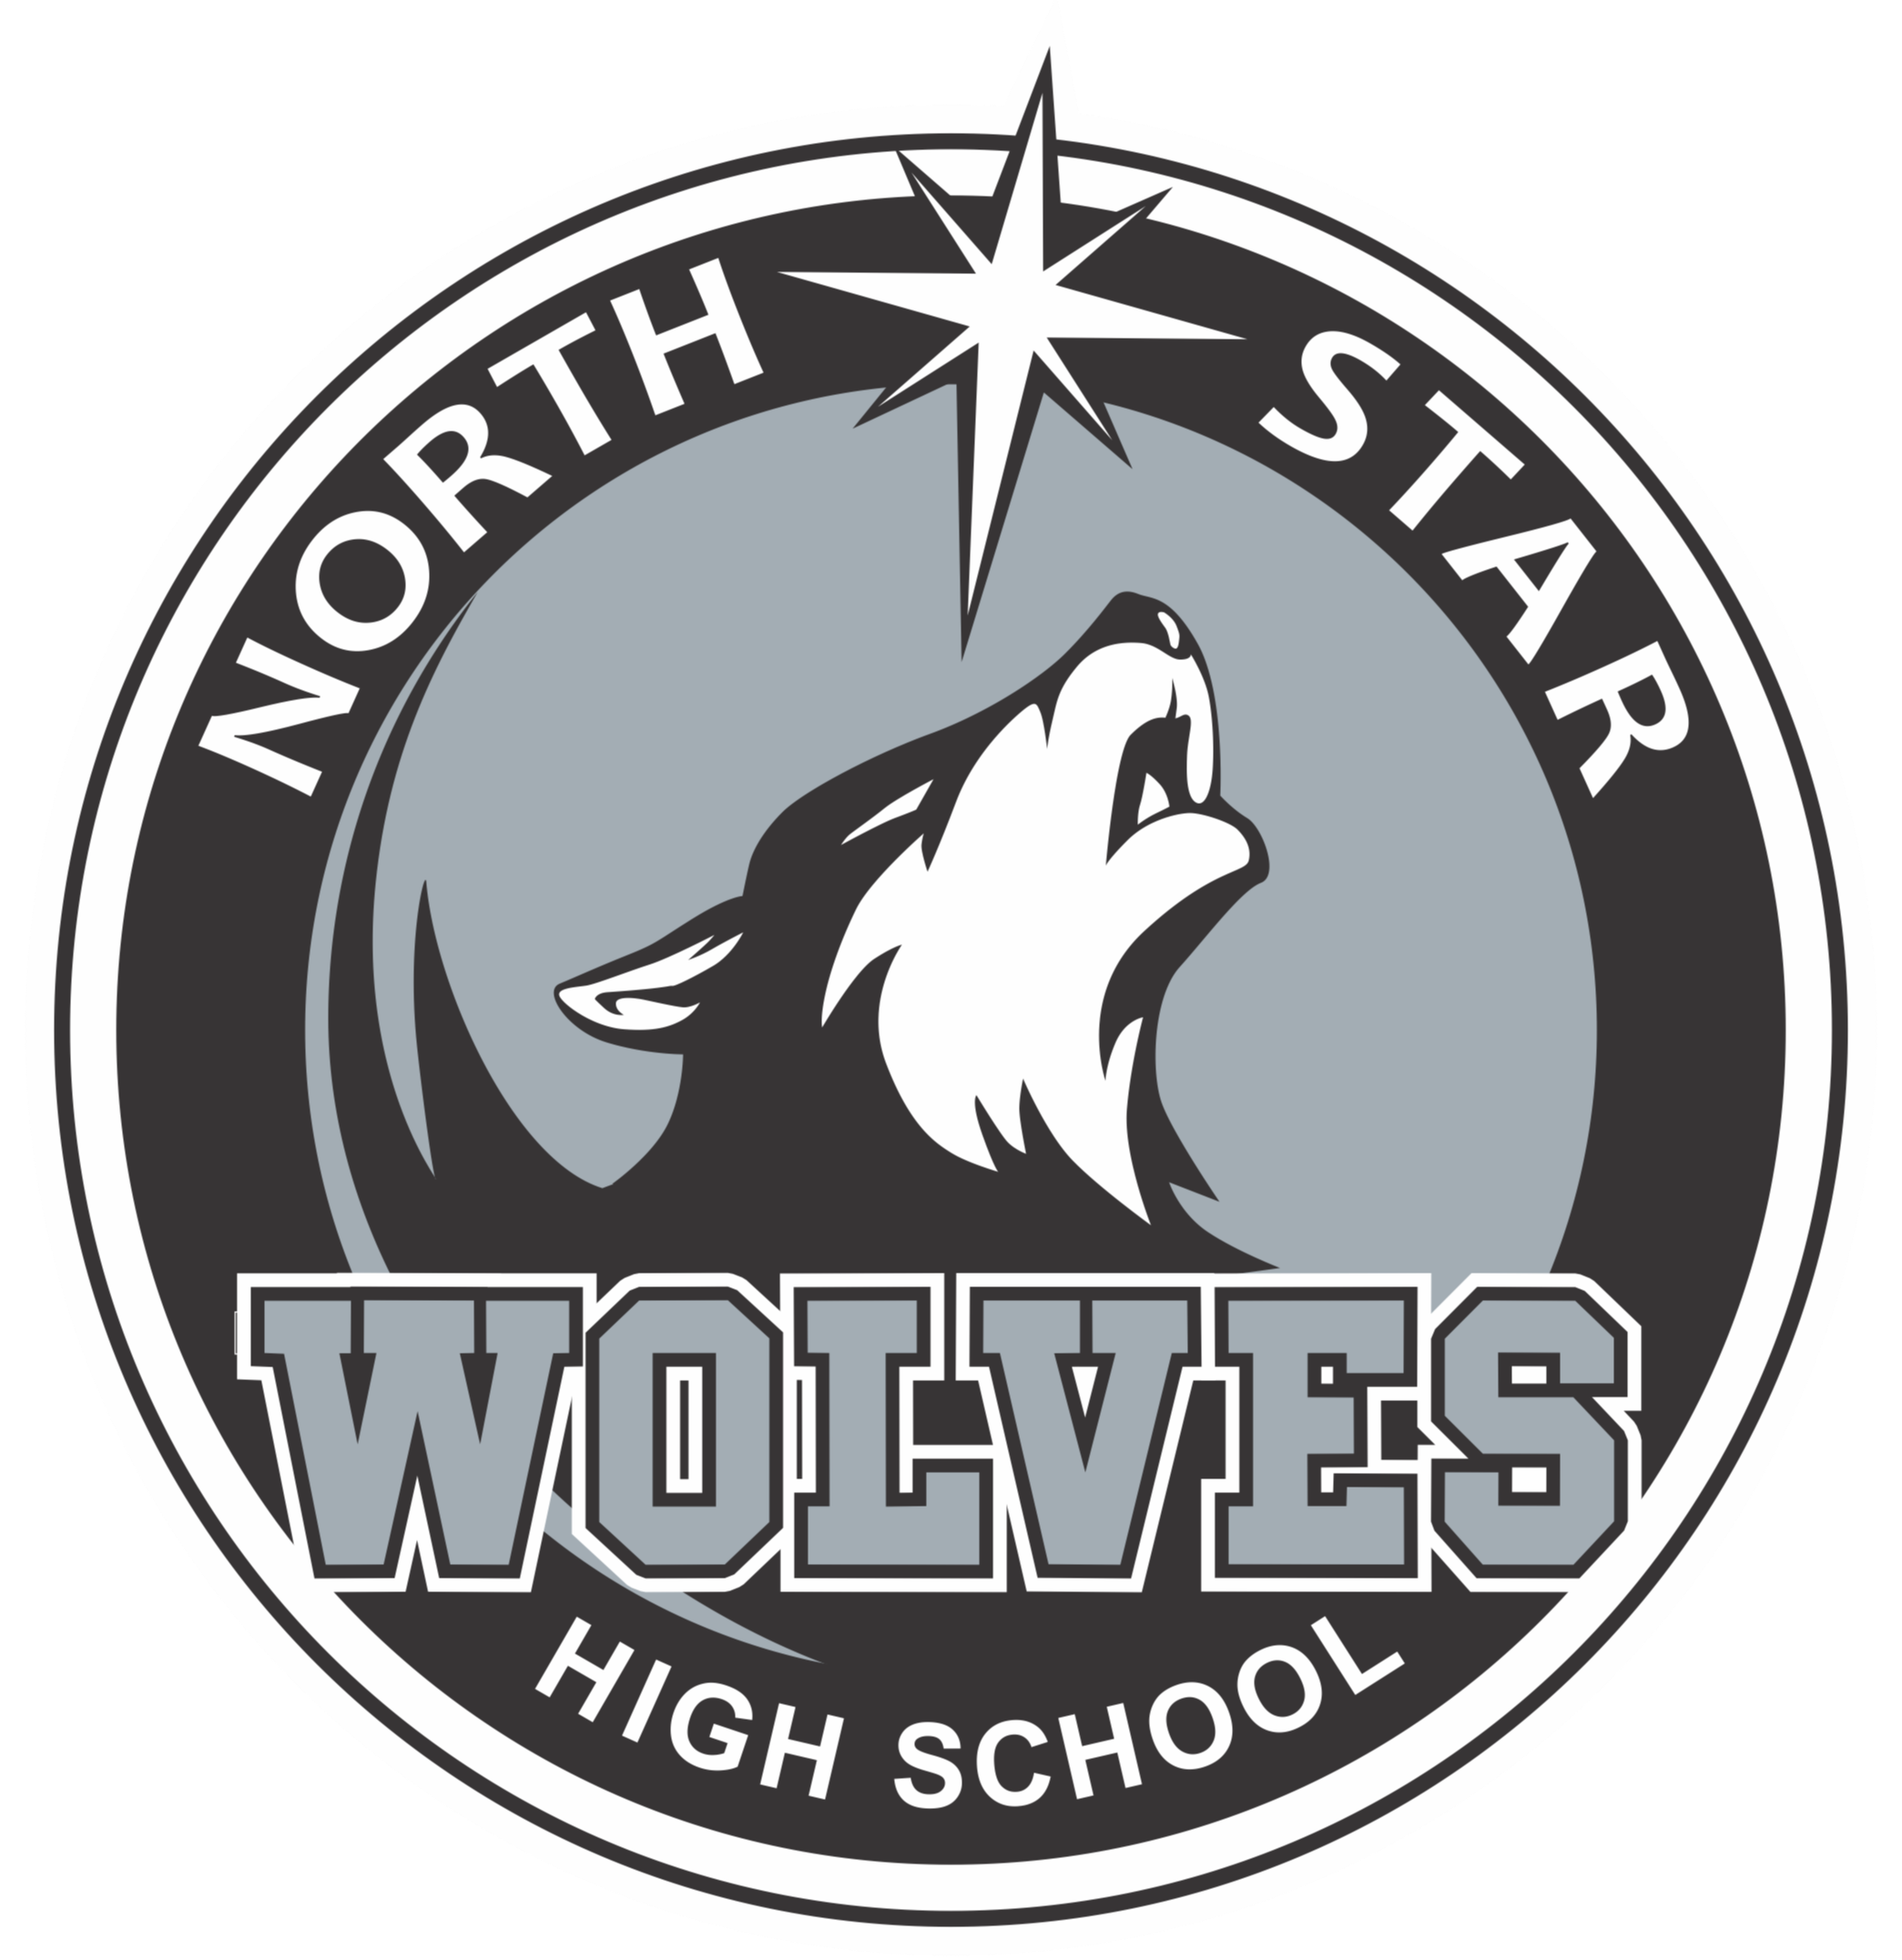 North Star High School footer logo